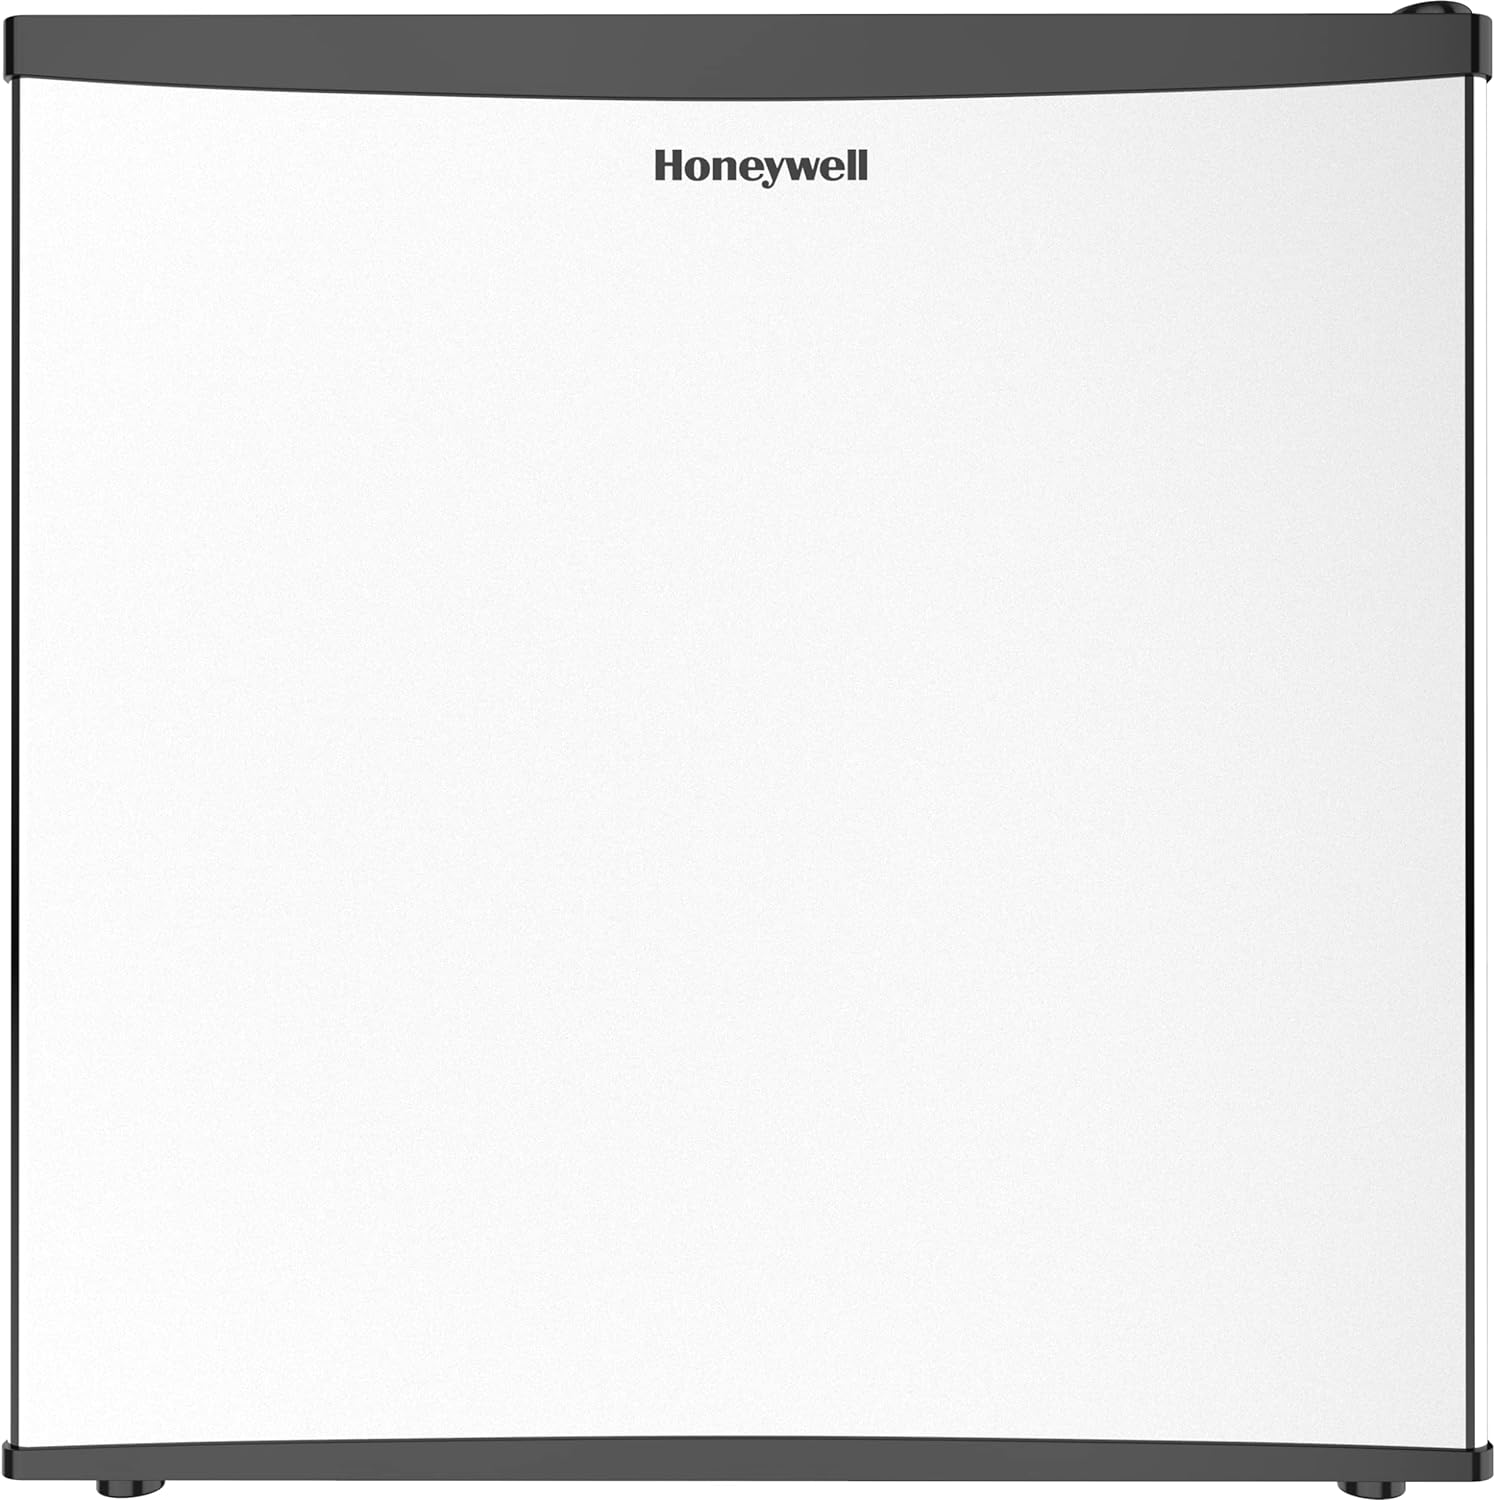 Honeywell Mini Compact Freezer Countertop 1.1 Cubic Feet